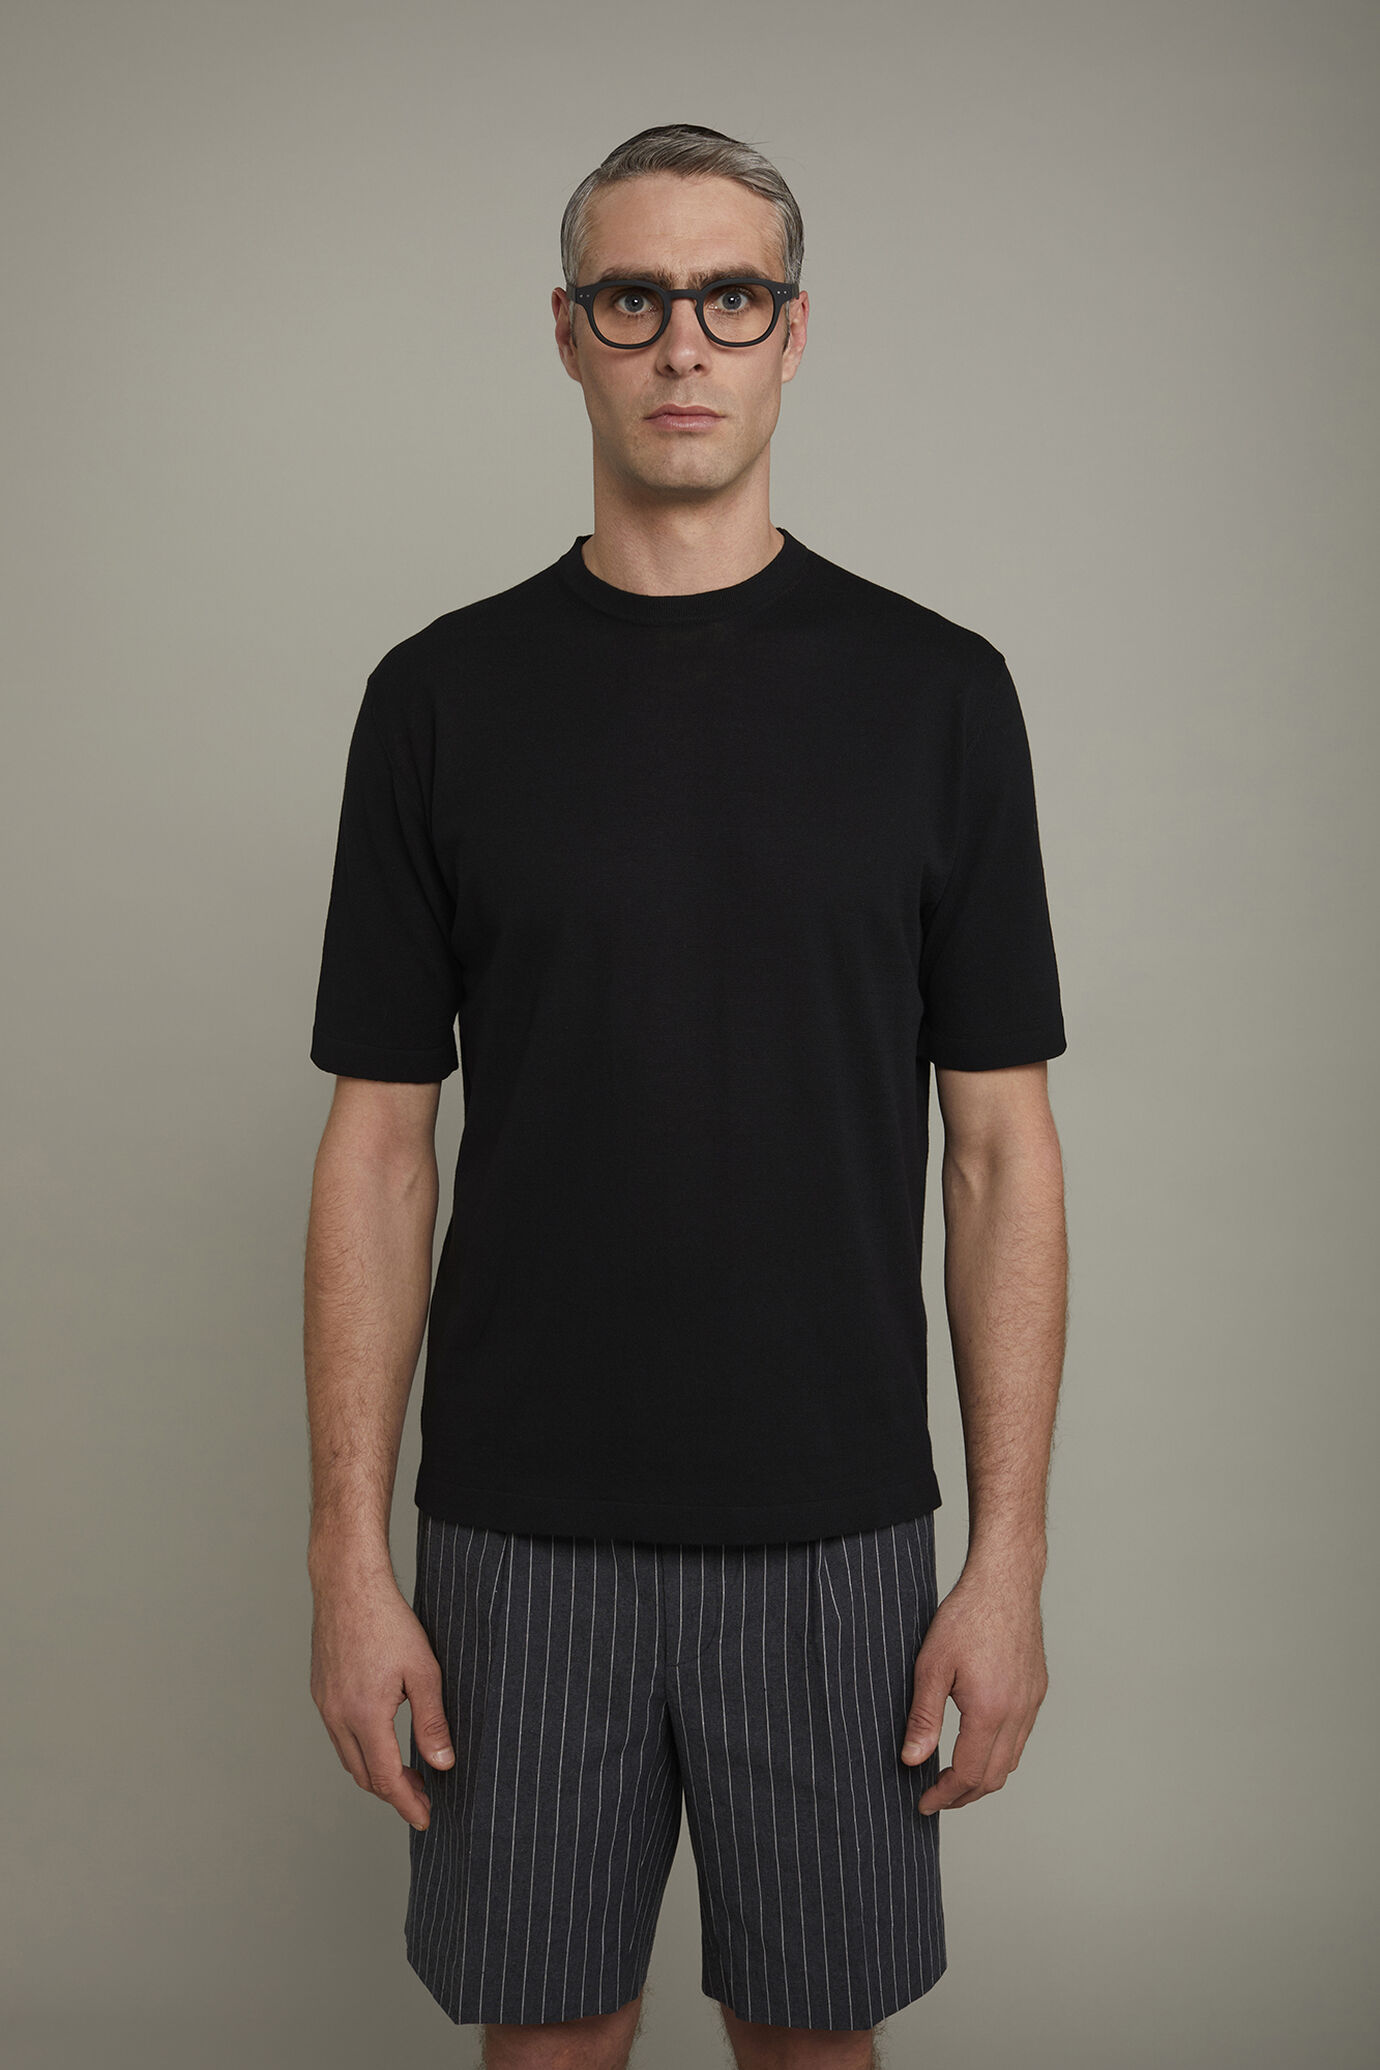 Men's knitted t-shirt 100% cotton short-sleeved regular fit image number 2